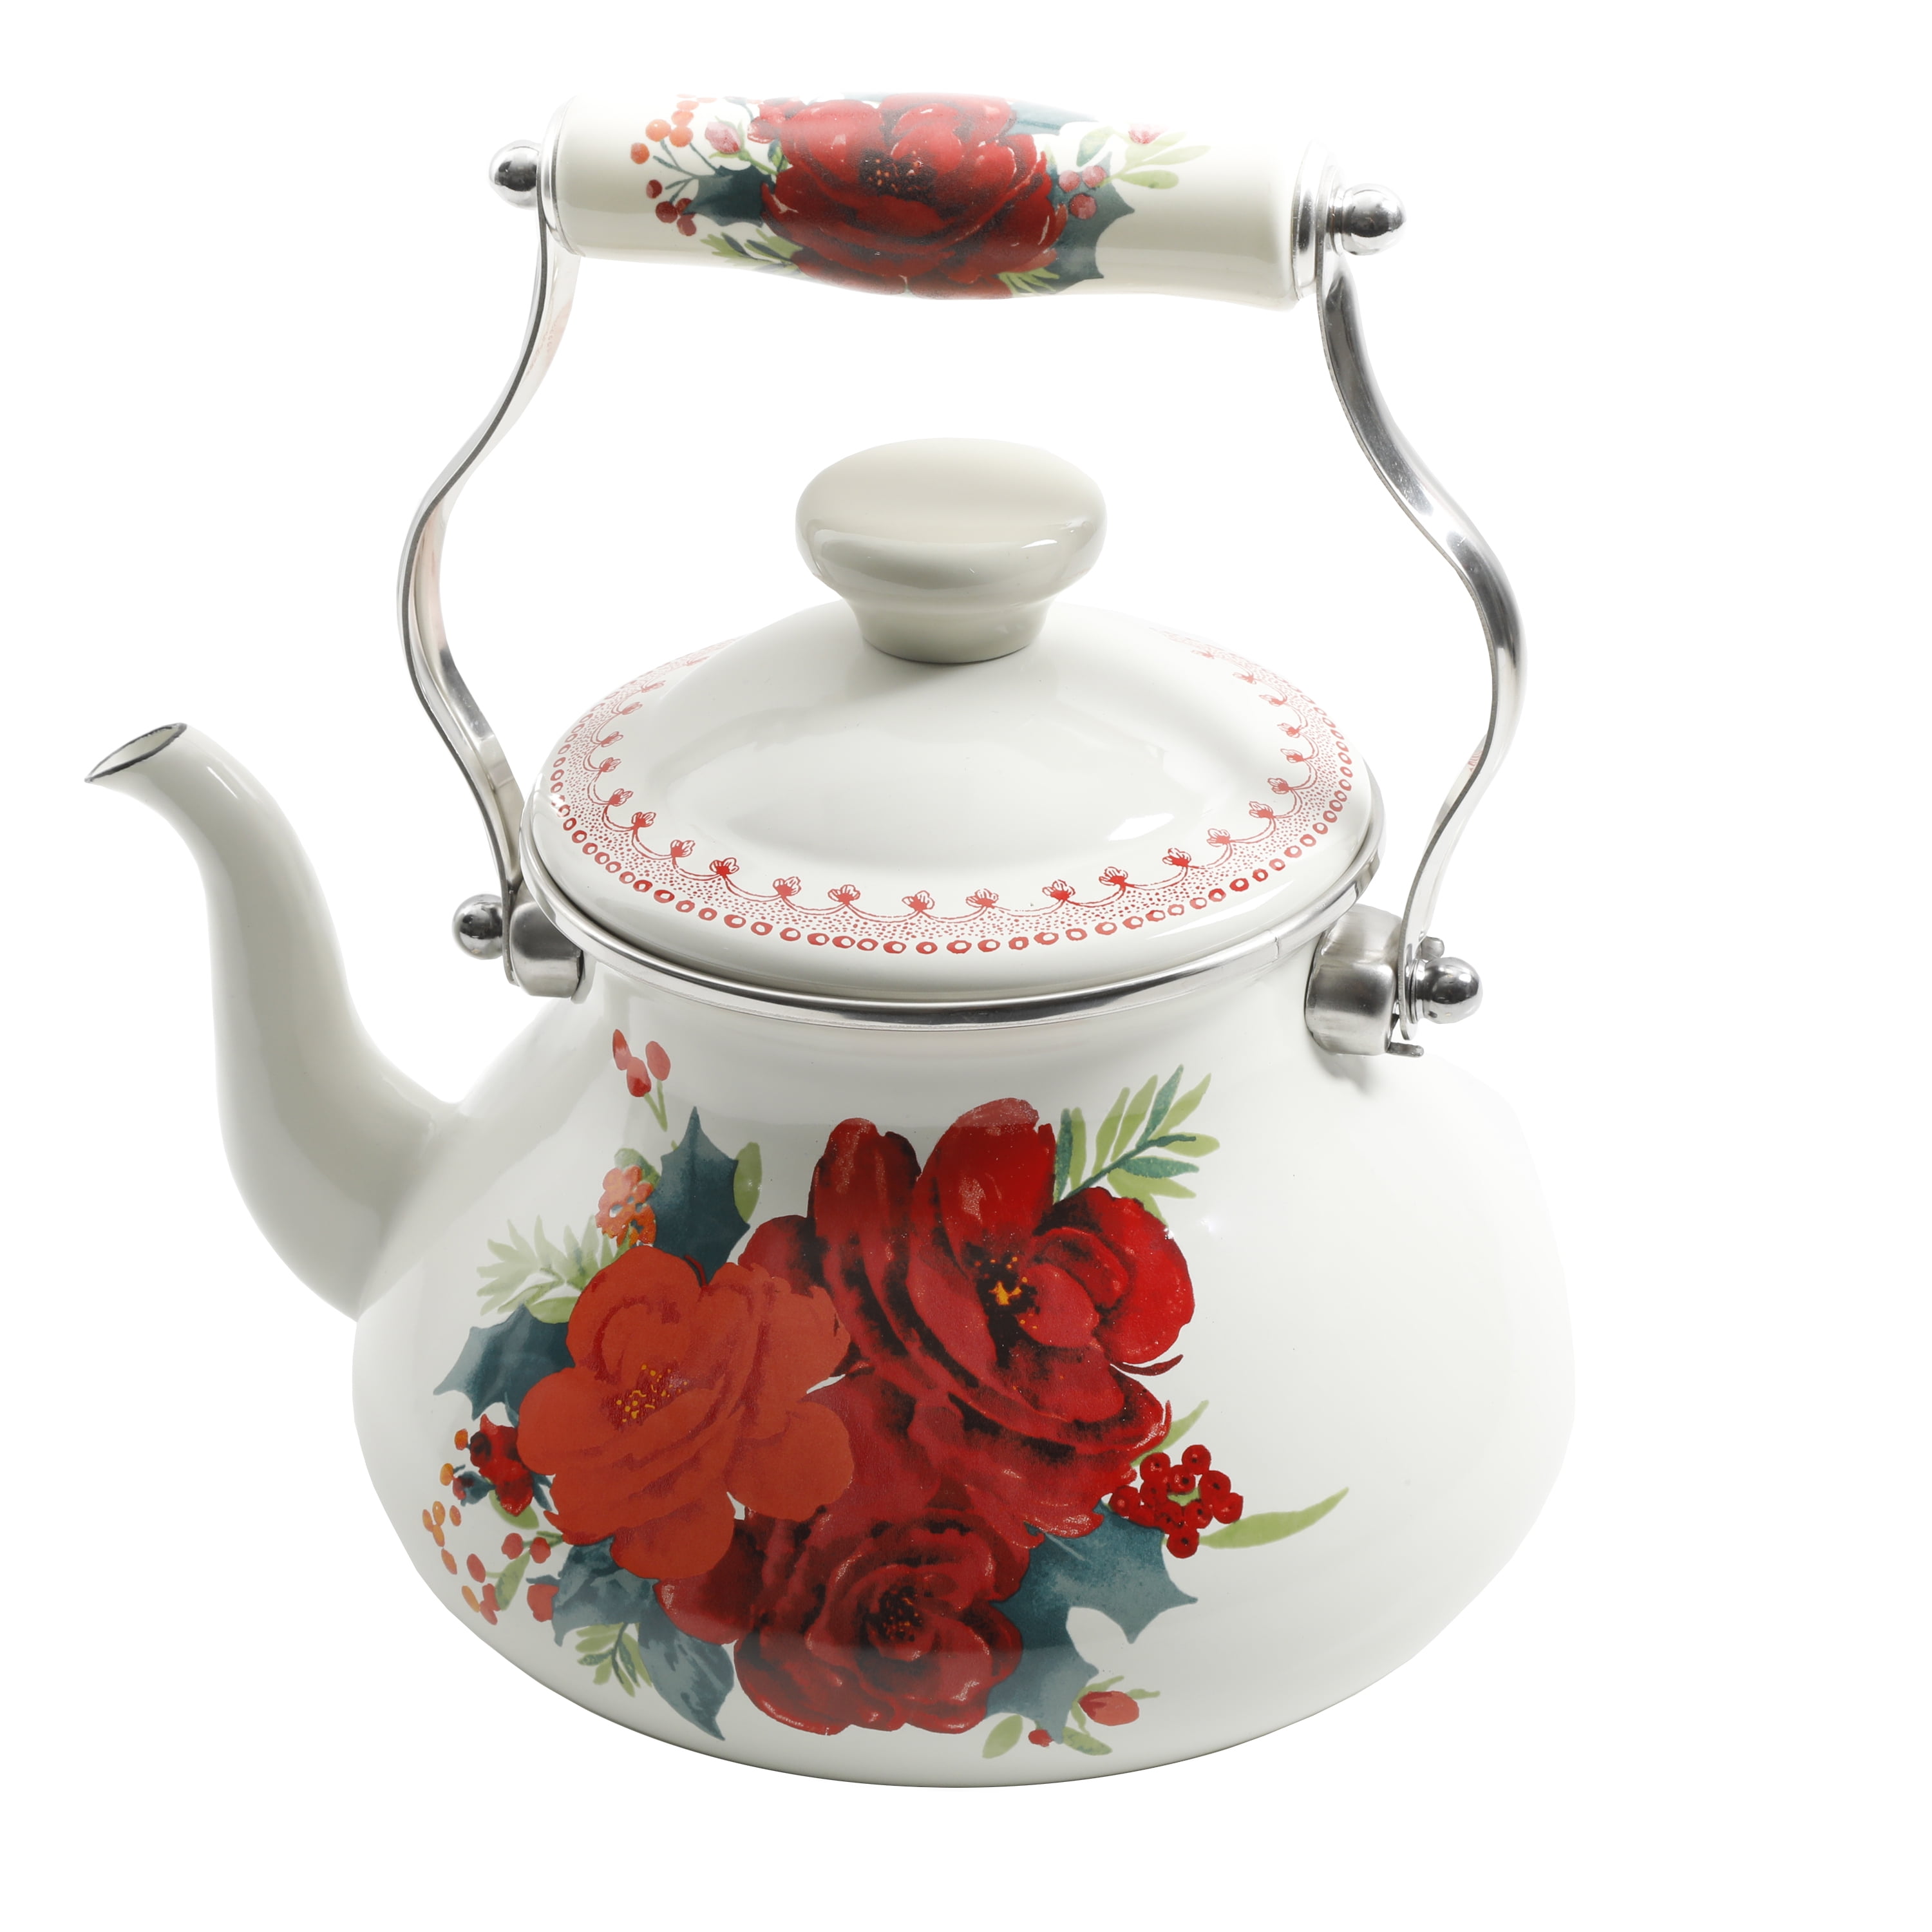 The Pioneer Woman Cheerful Rose Enamel on Steel 1.9 Quart Tea Kettle